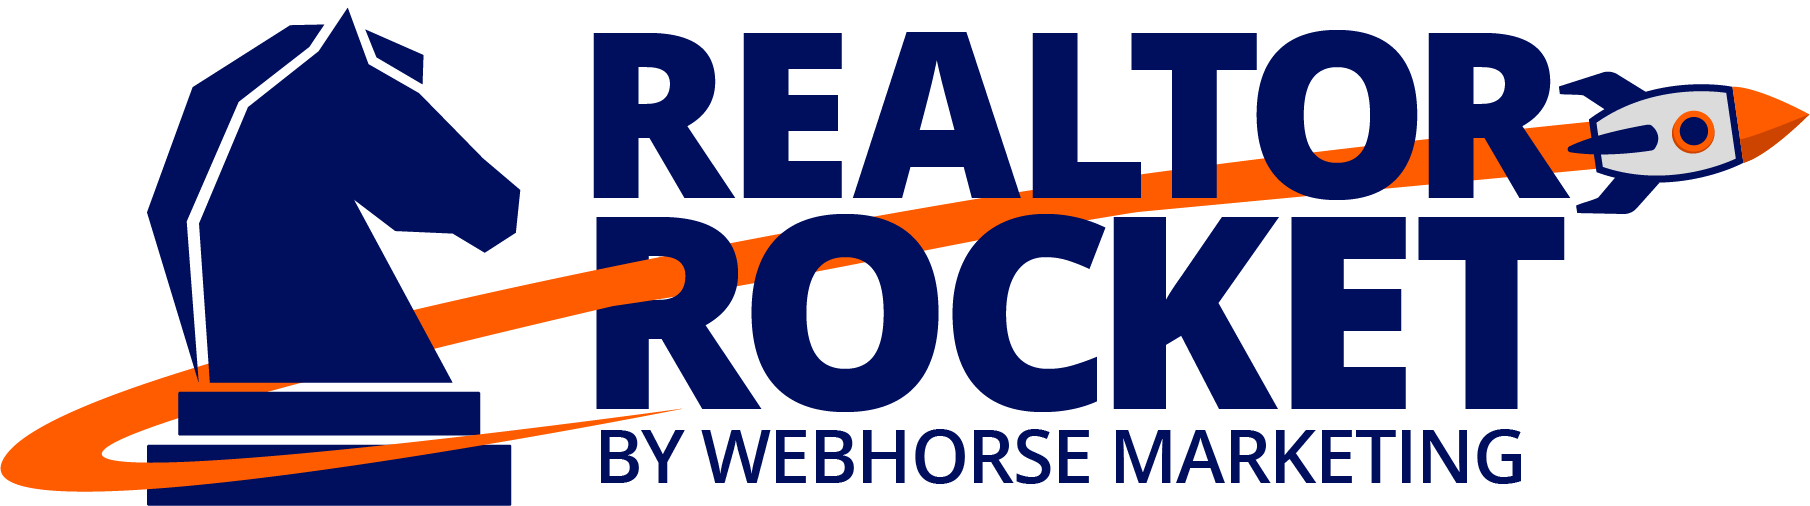 Realtor Rocket By WebHorse Marketing